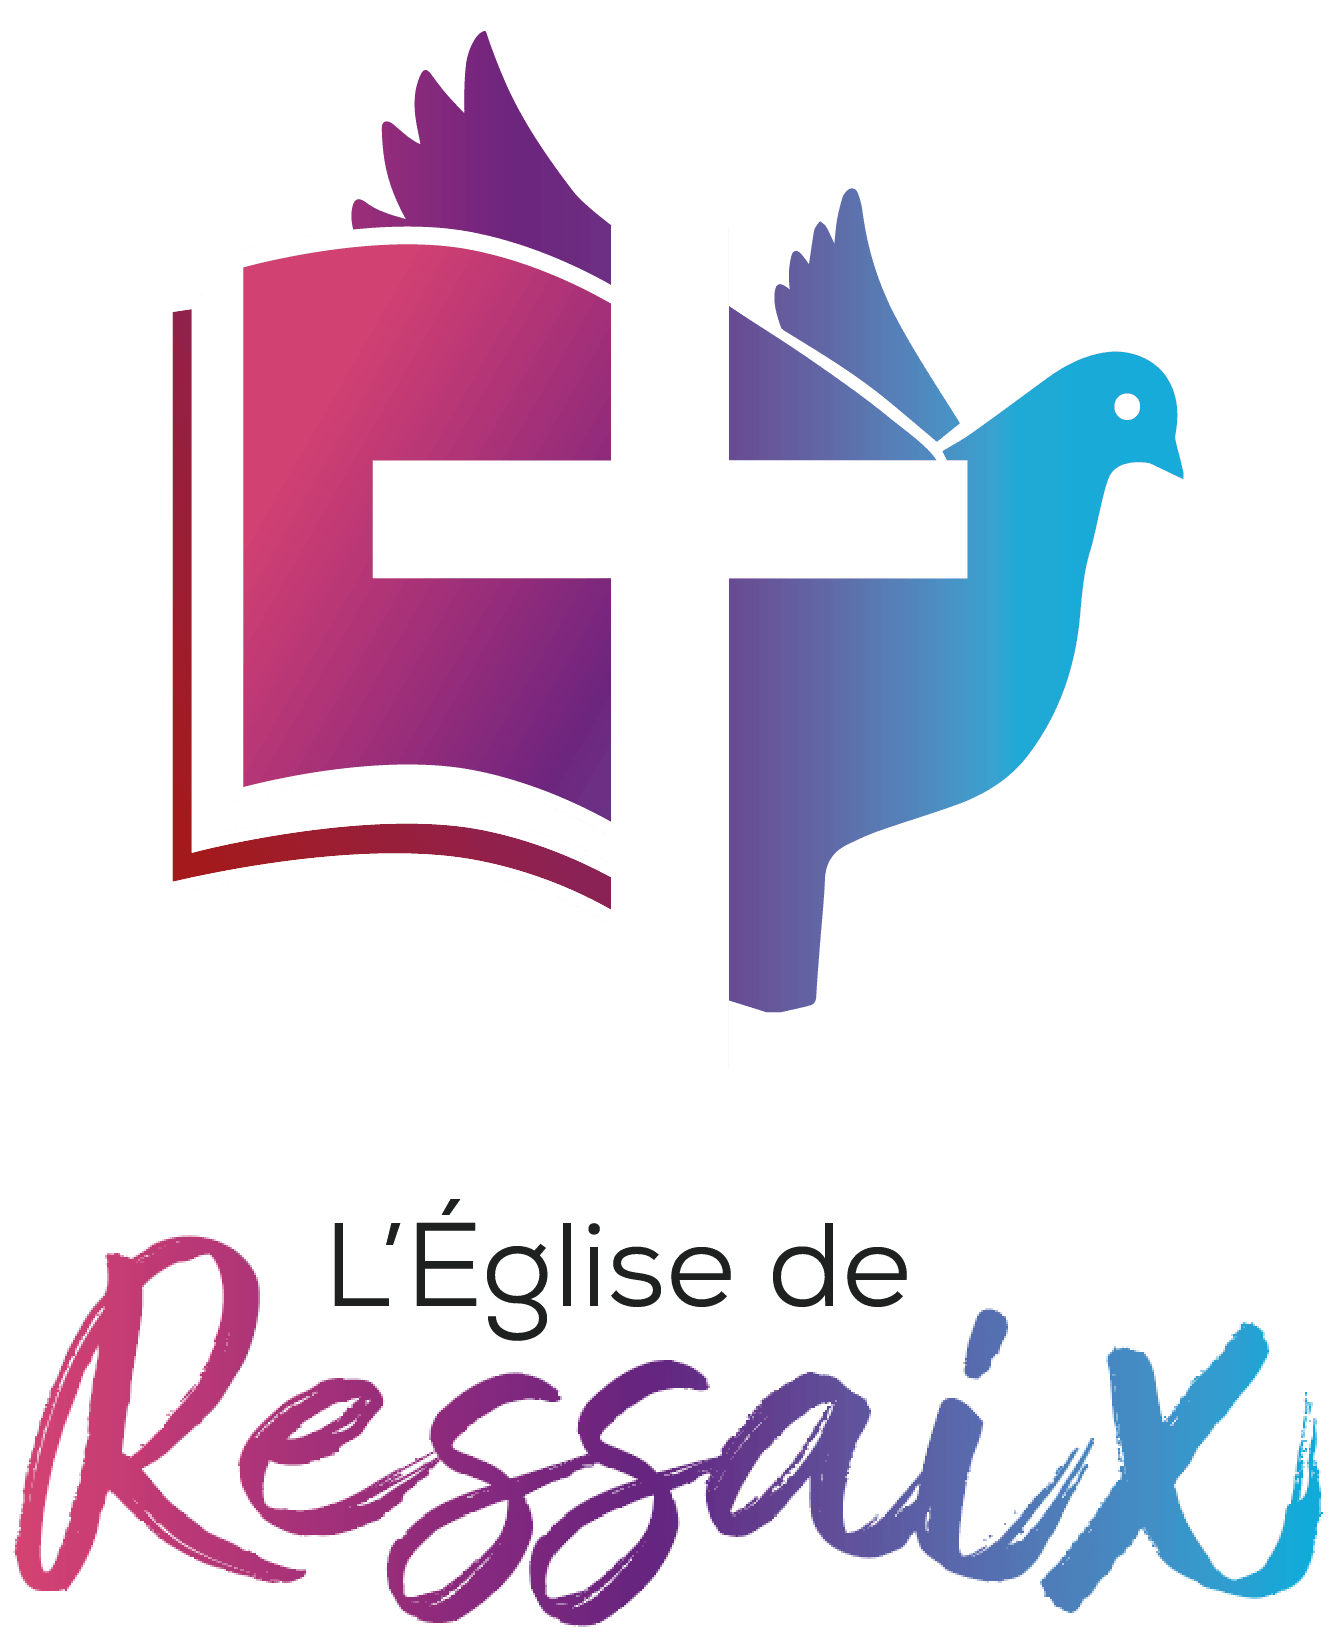 Eglise de Ressaix